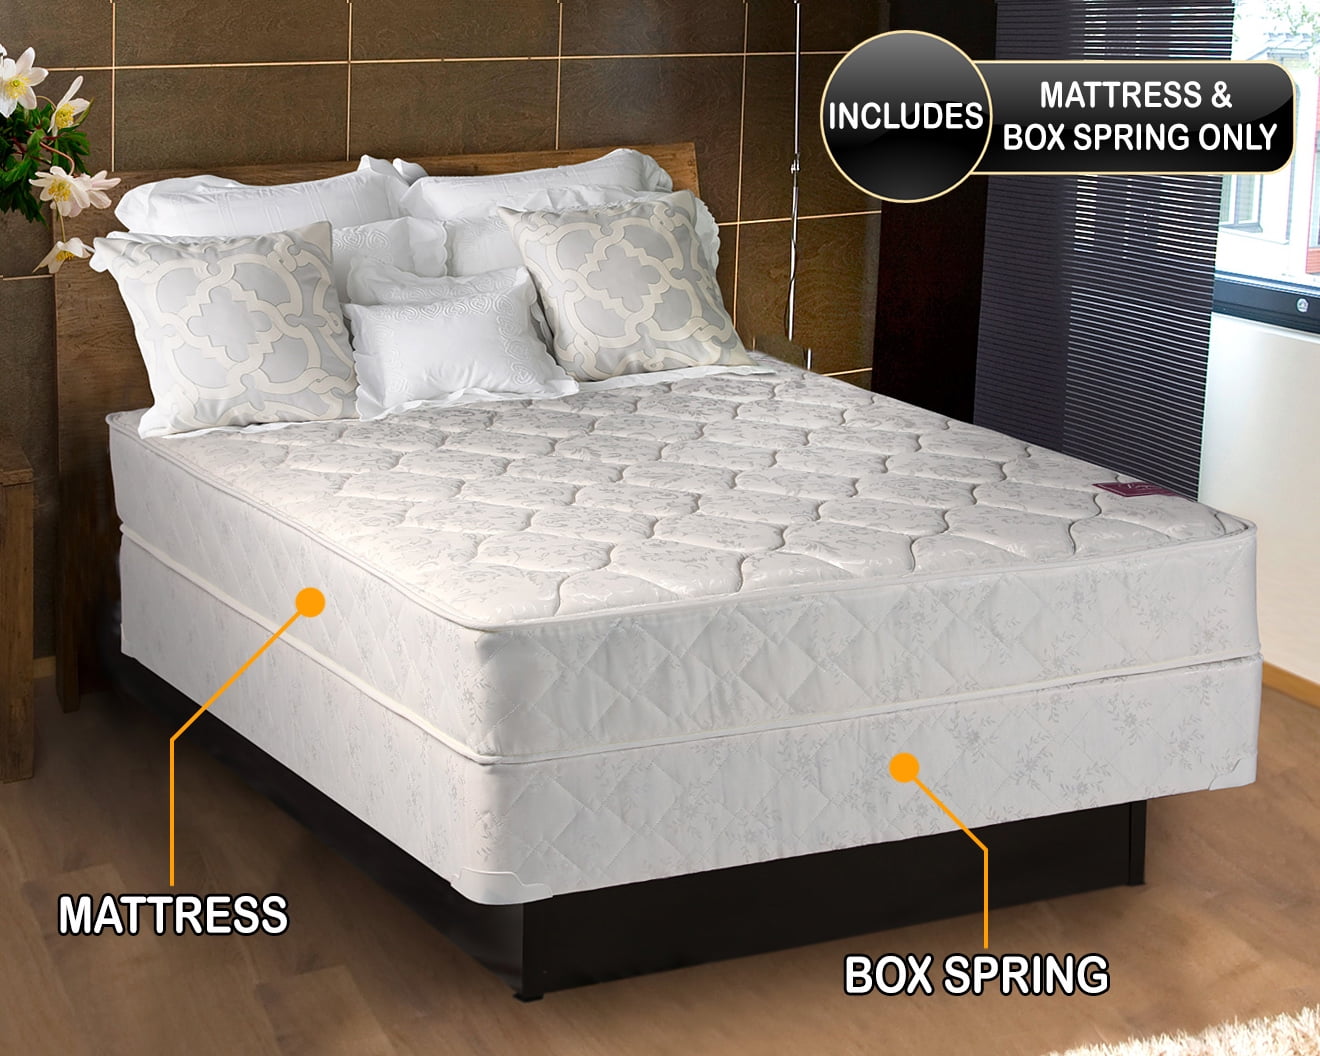 boscov's mattress and box spring sets